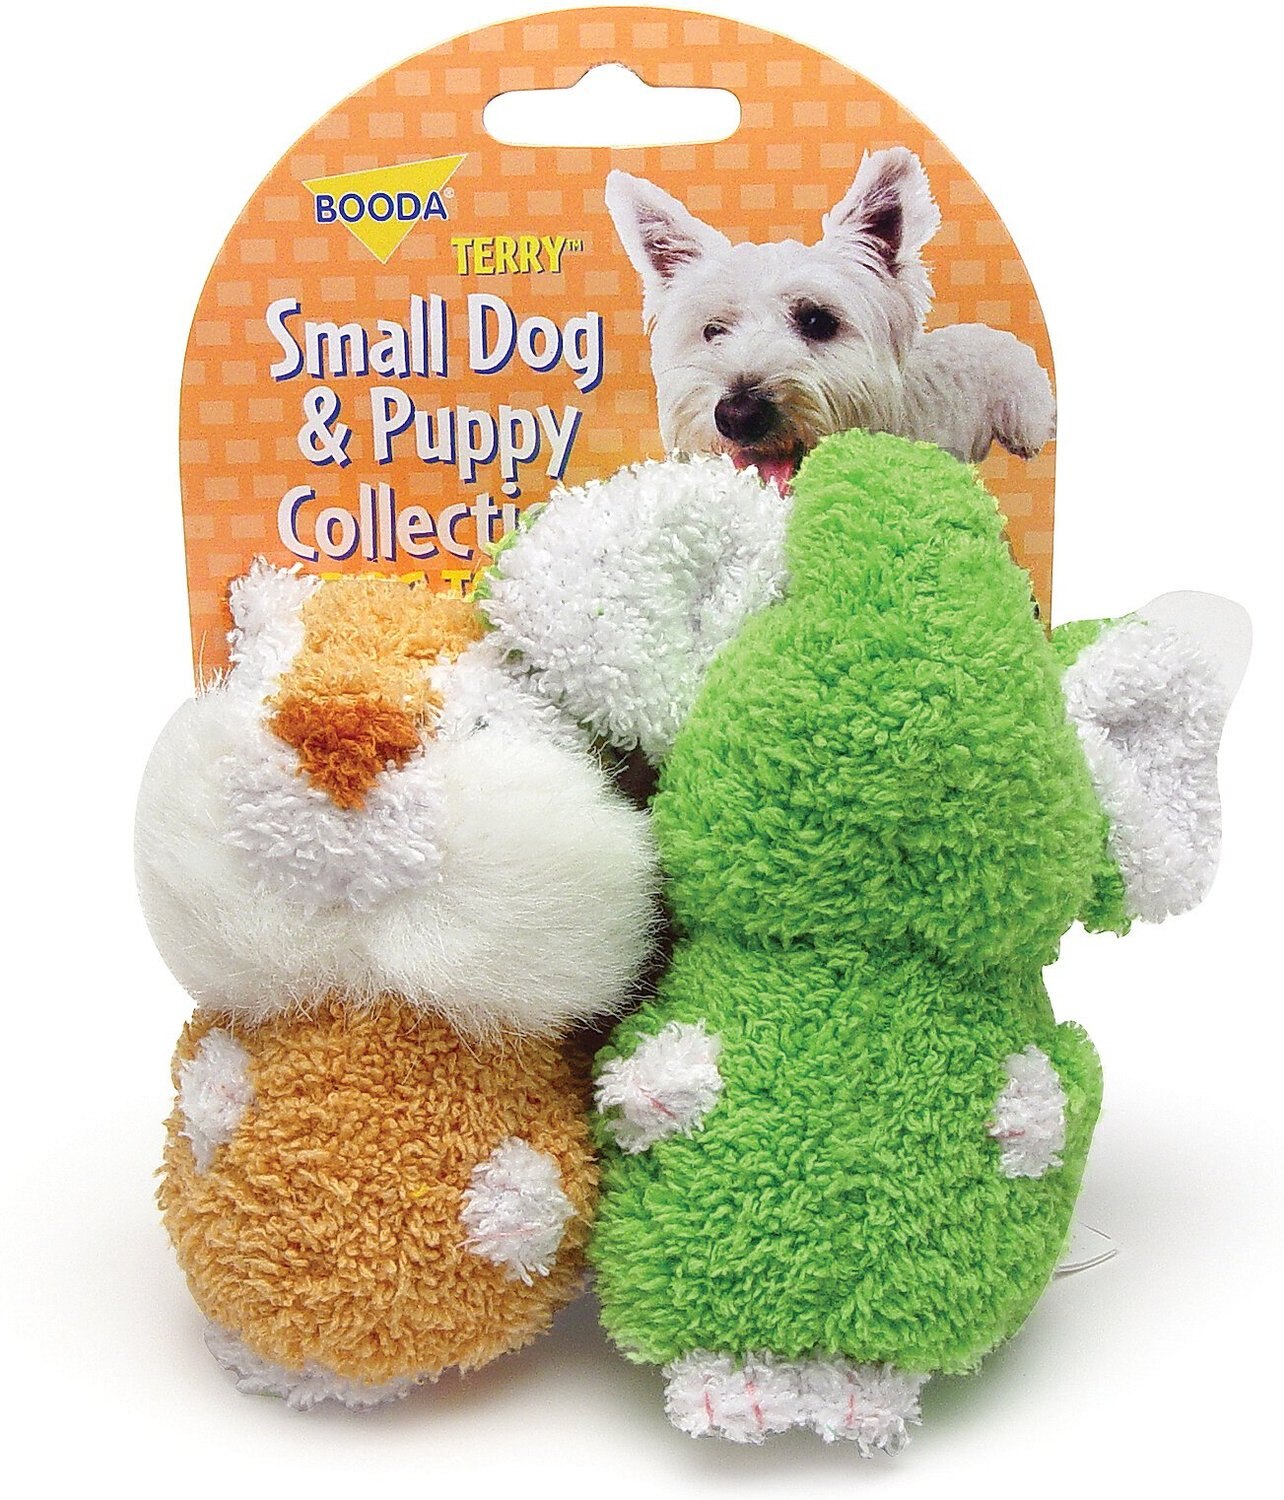 little dog stuffed animals